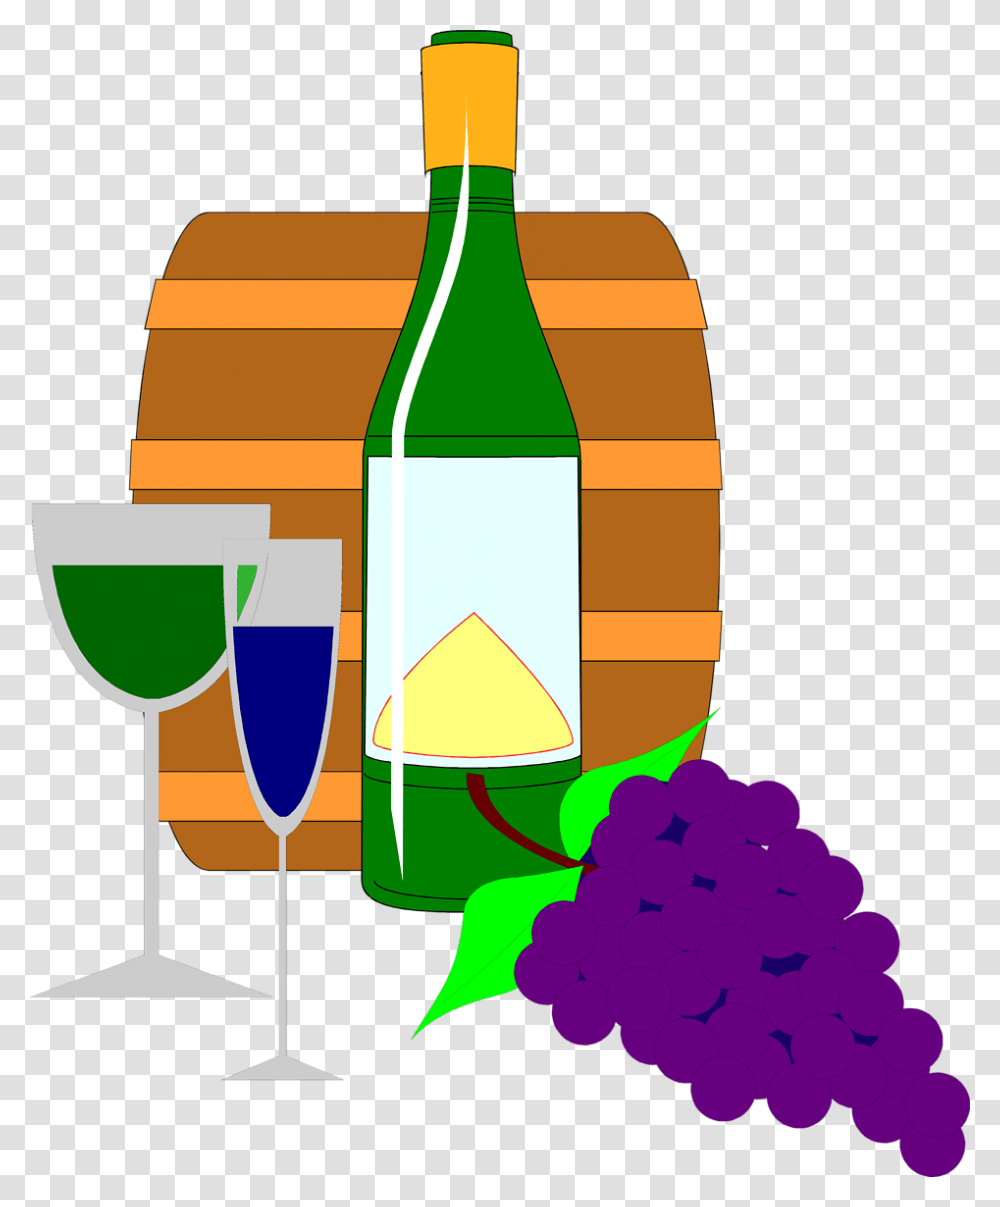 Wine Free Stock Photo Illustration Of A Bottle Of Wine, Beverage, Alcohol, Wine Bottle, Glass Transparent Png